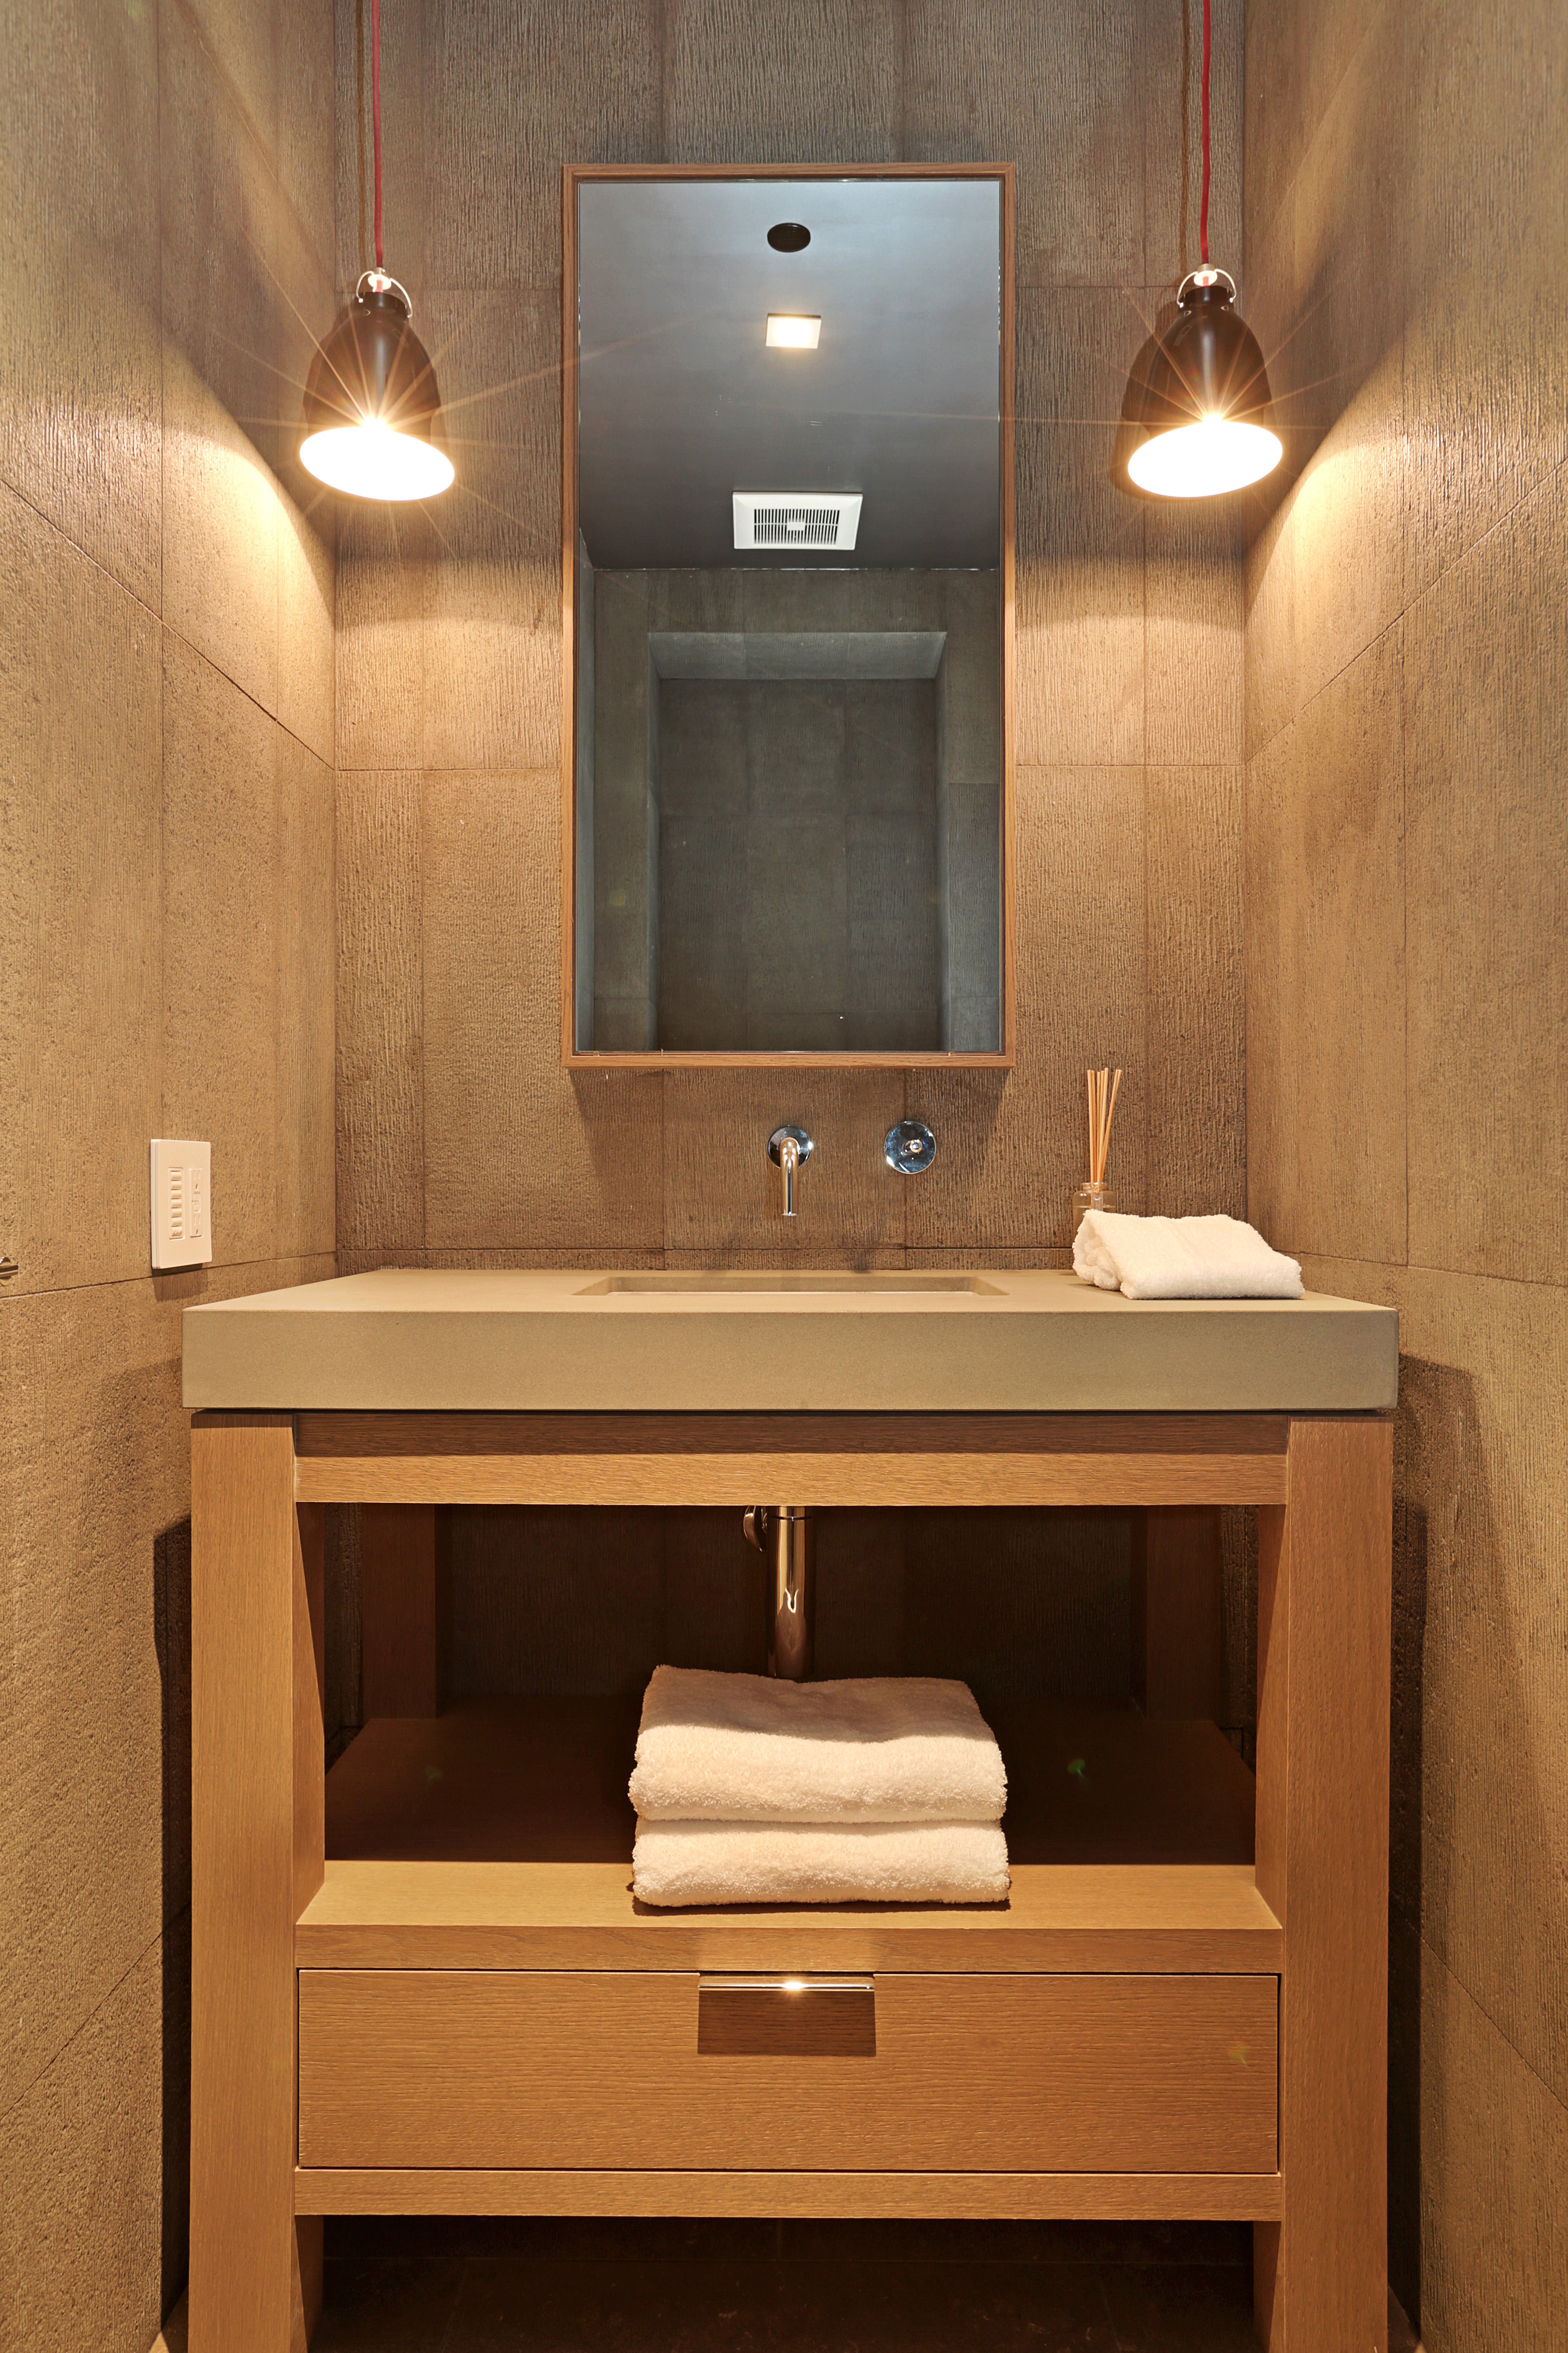 Shinnoki - wood - brown bathroom sink